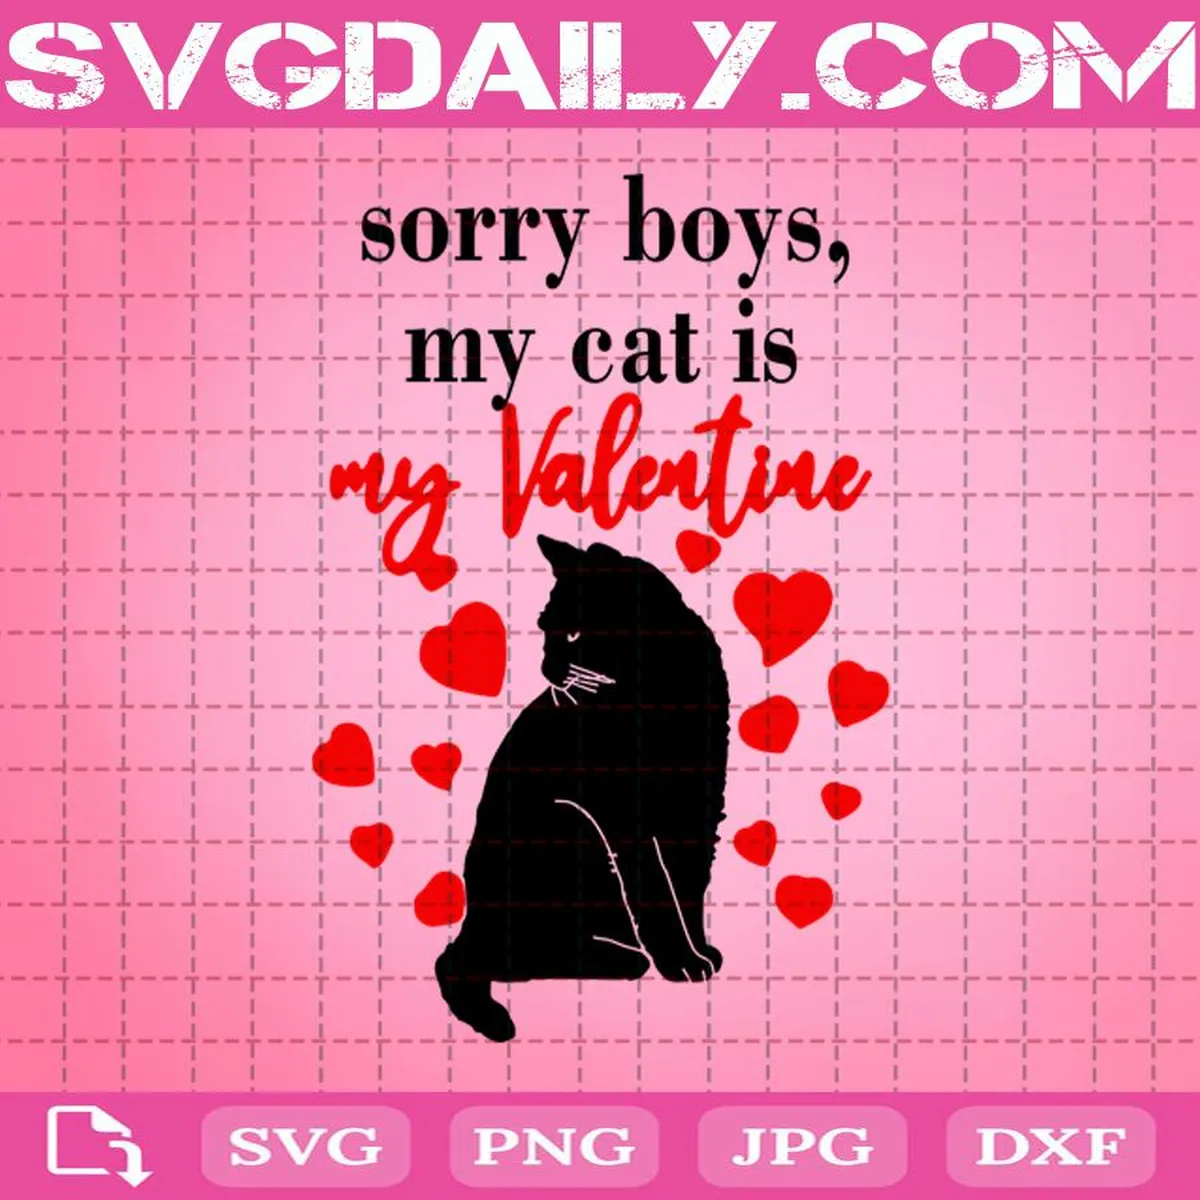 Sorry Boys My Cat Is My Valentine Svg, Black Cat Svg, Valentine’s Day Svg, Black Cat Lover Svg, Heart Svg